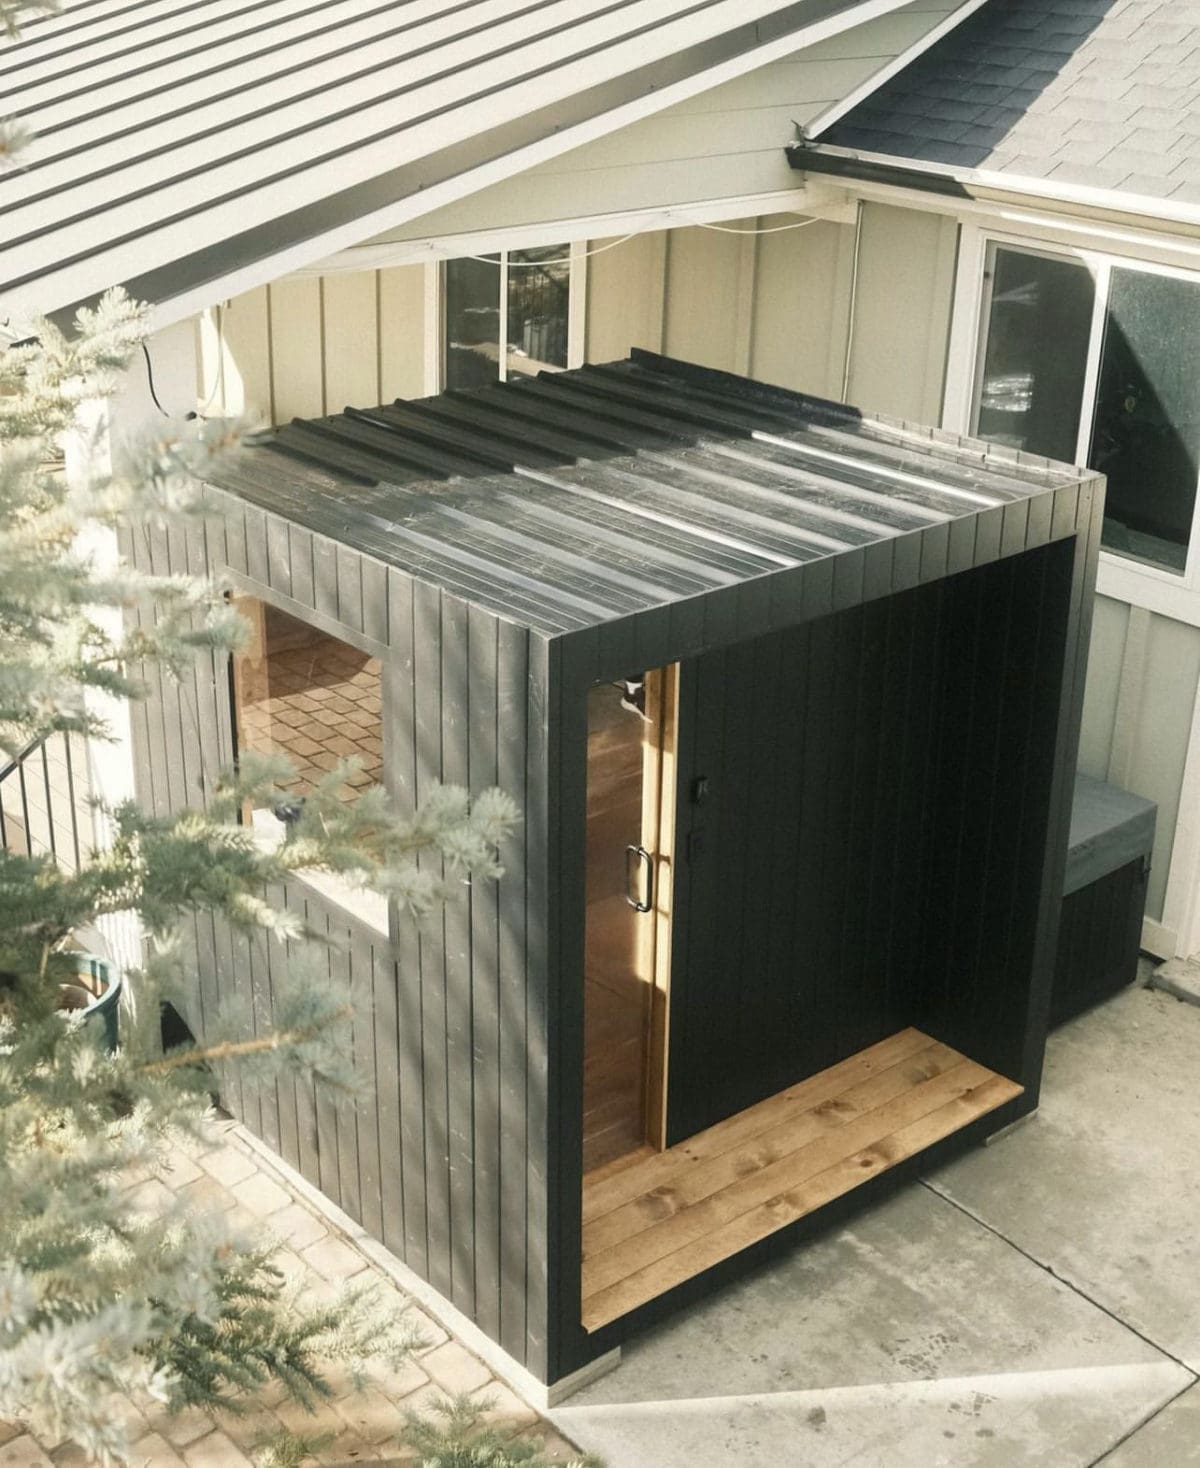 New Primitive 212 sauna with HUUM DROP heater